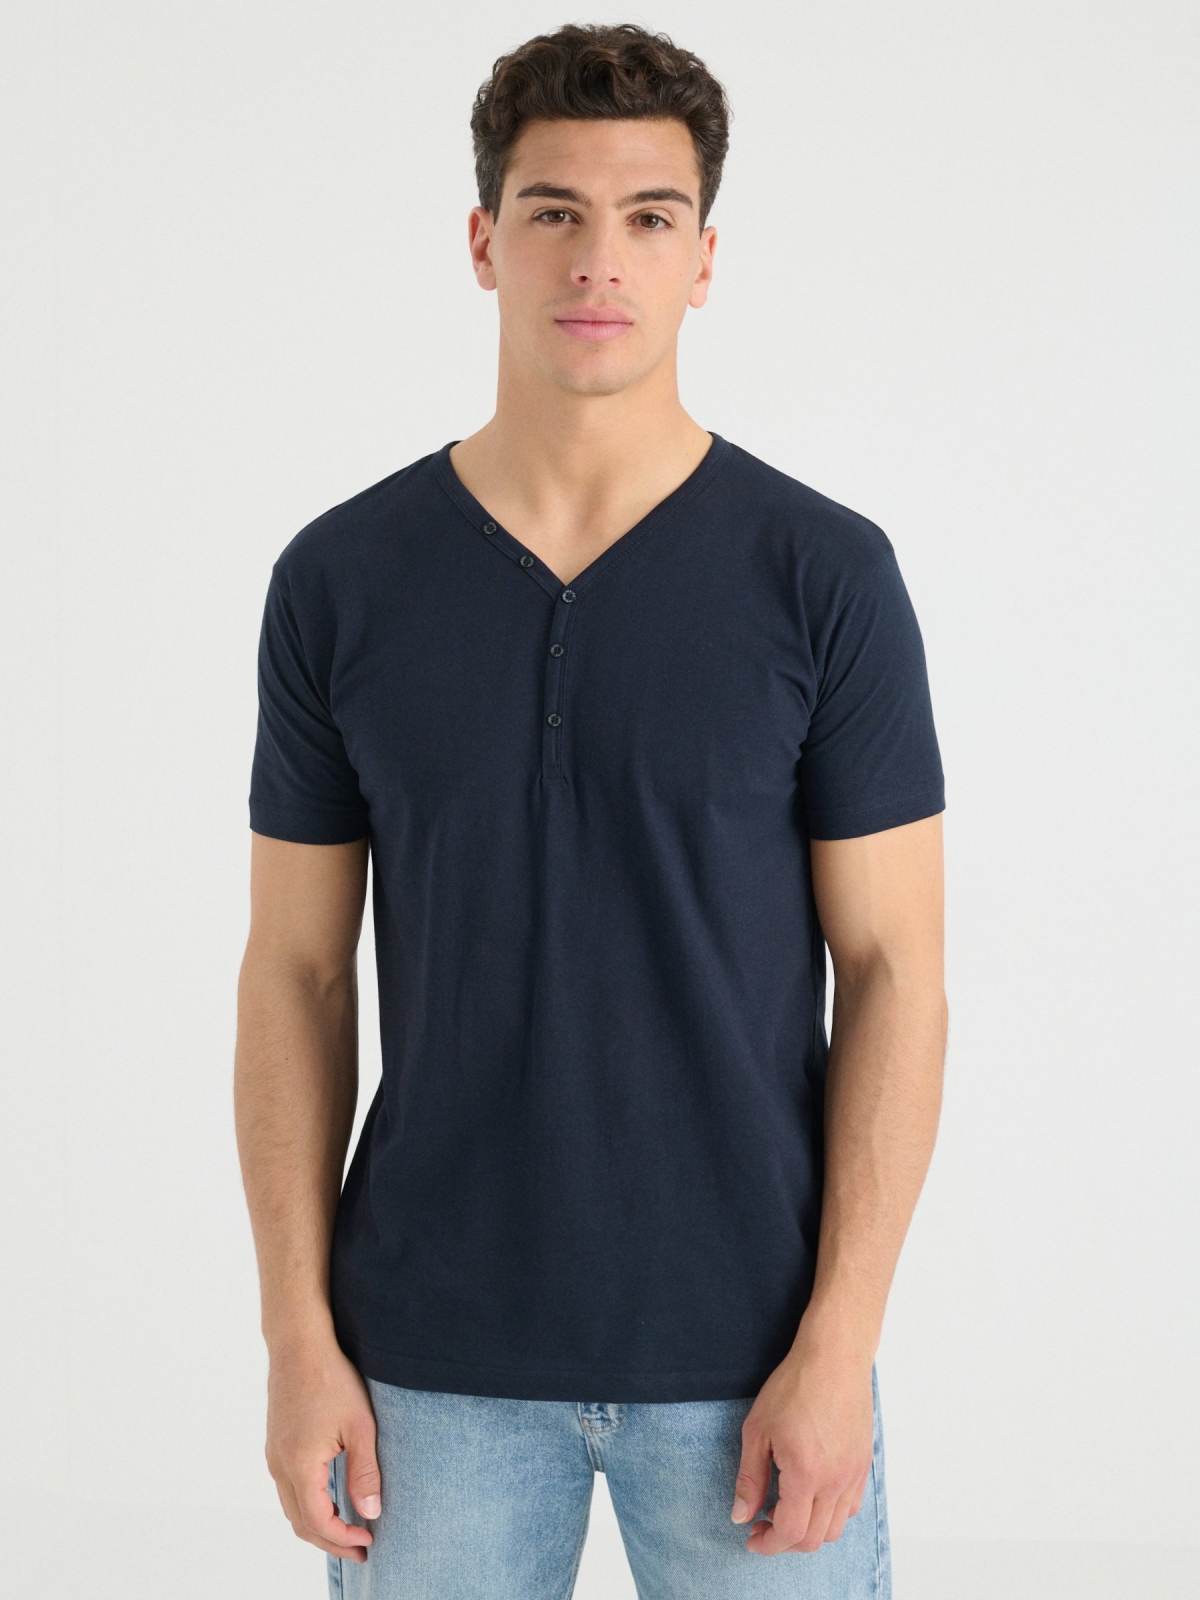 Camiseta cuello con botones azul oscuro vista media frontal